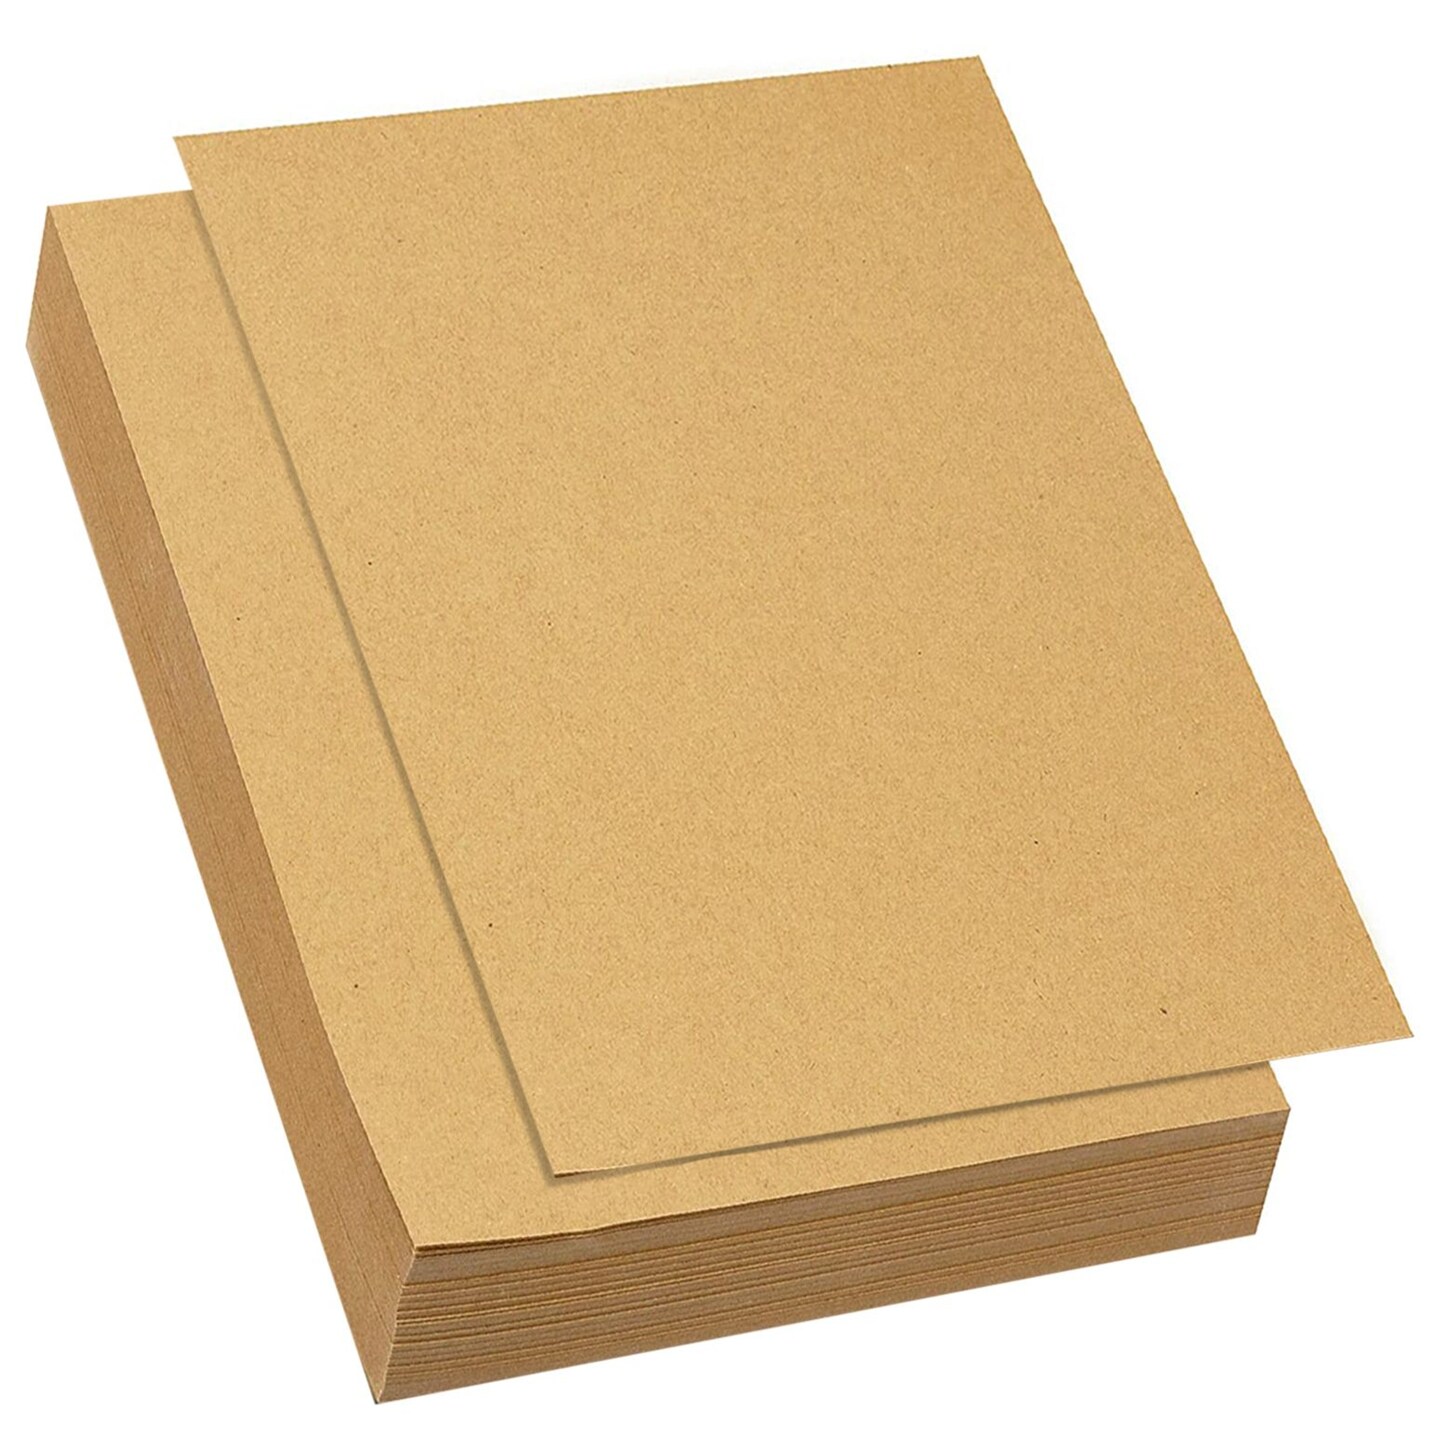 Buy Kraft Corrugated Cardboard Project Sheets